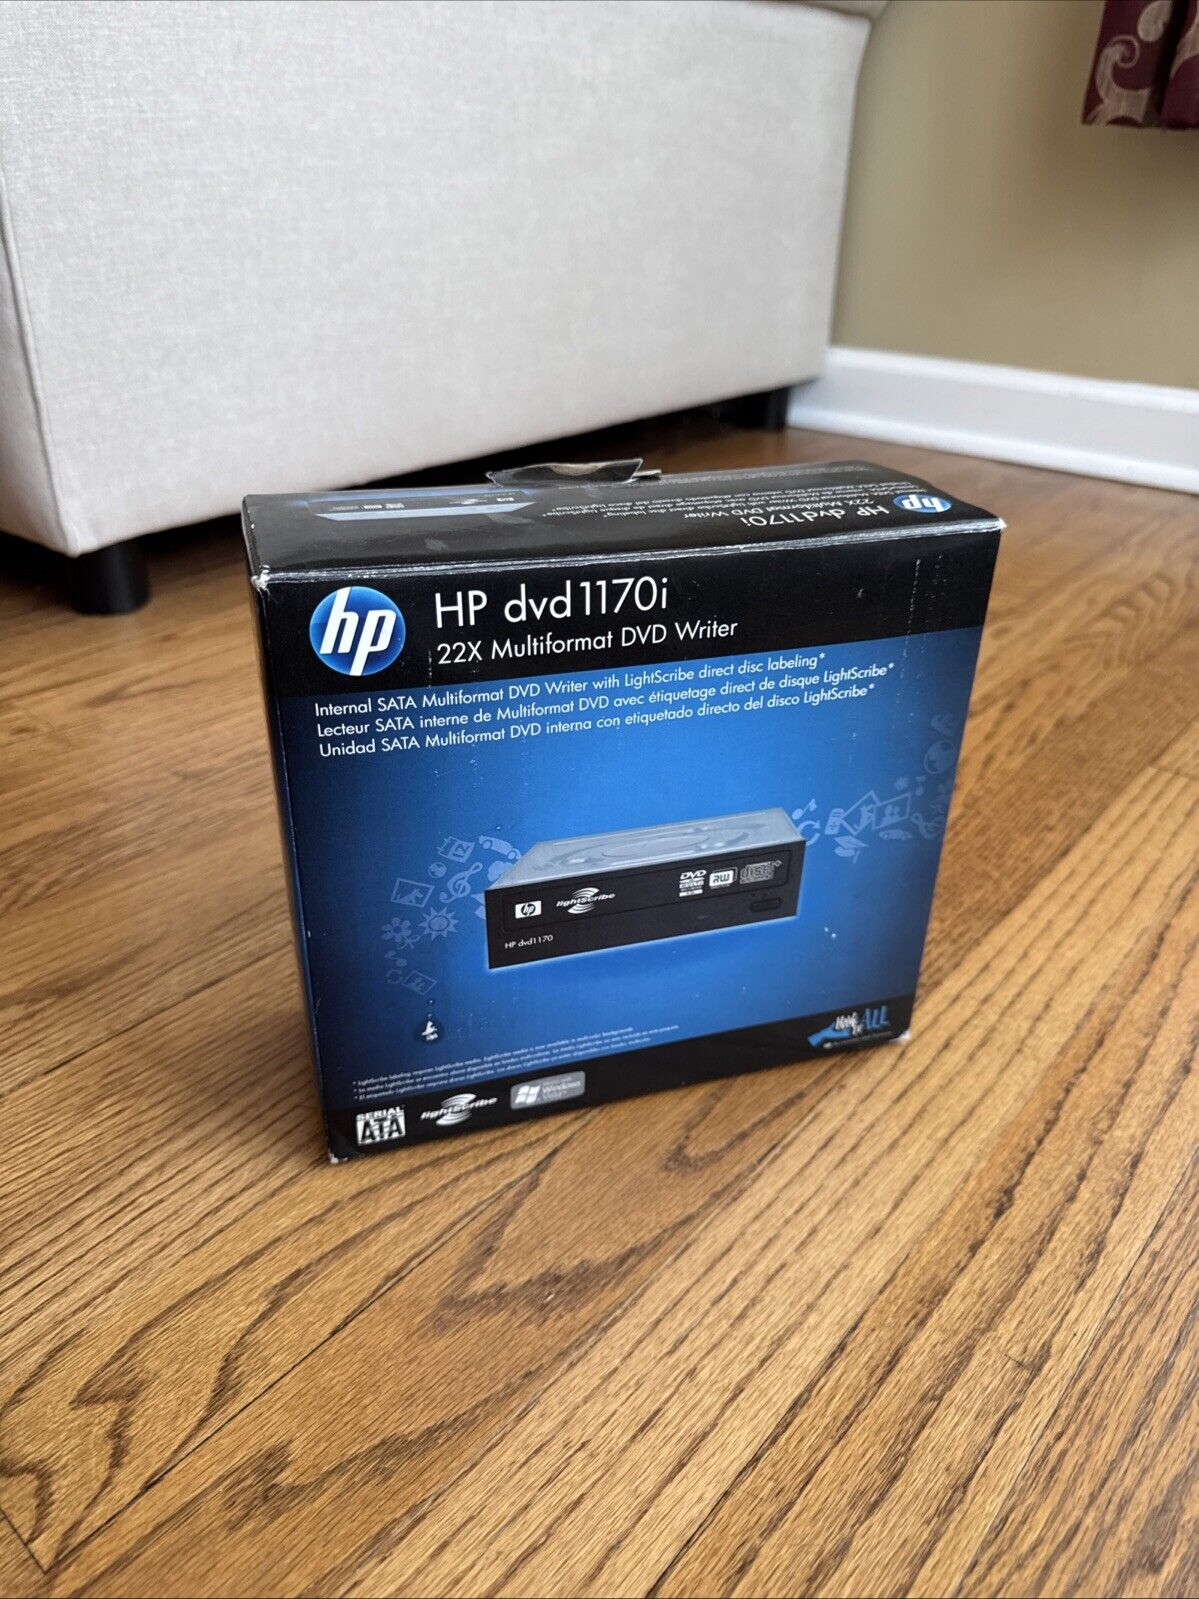 HP Desktop DVD1170i 22x Multiformat DVD Writer w/ Original Box